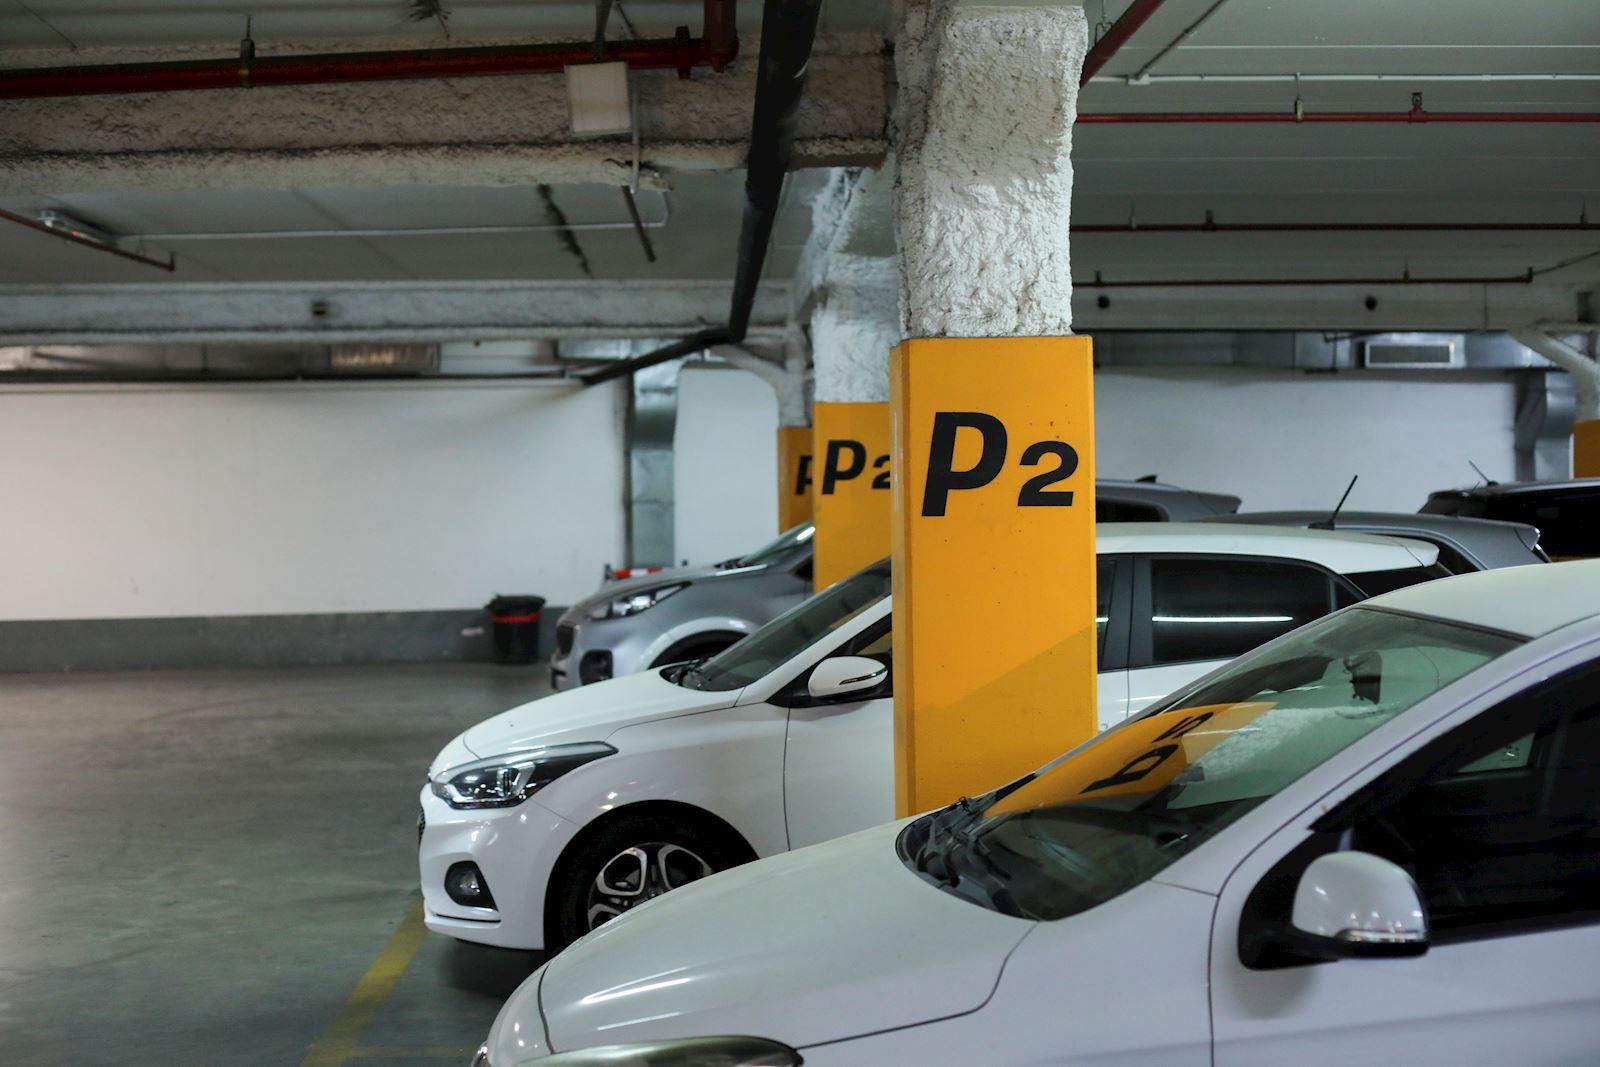 parking-lot-image 4